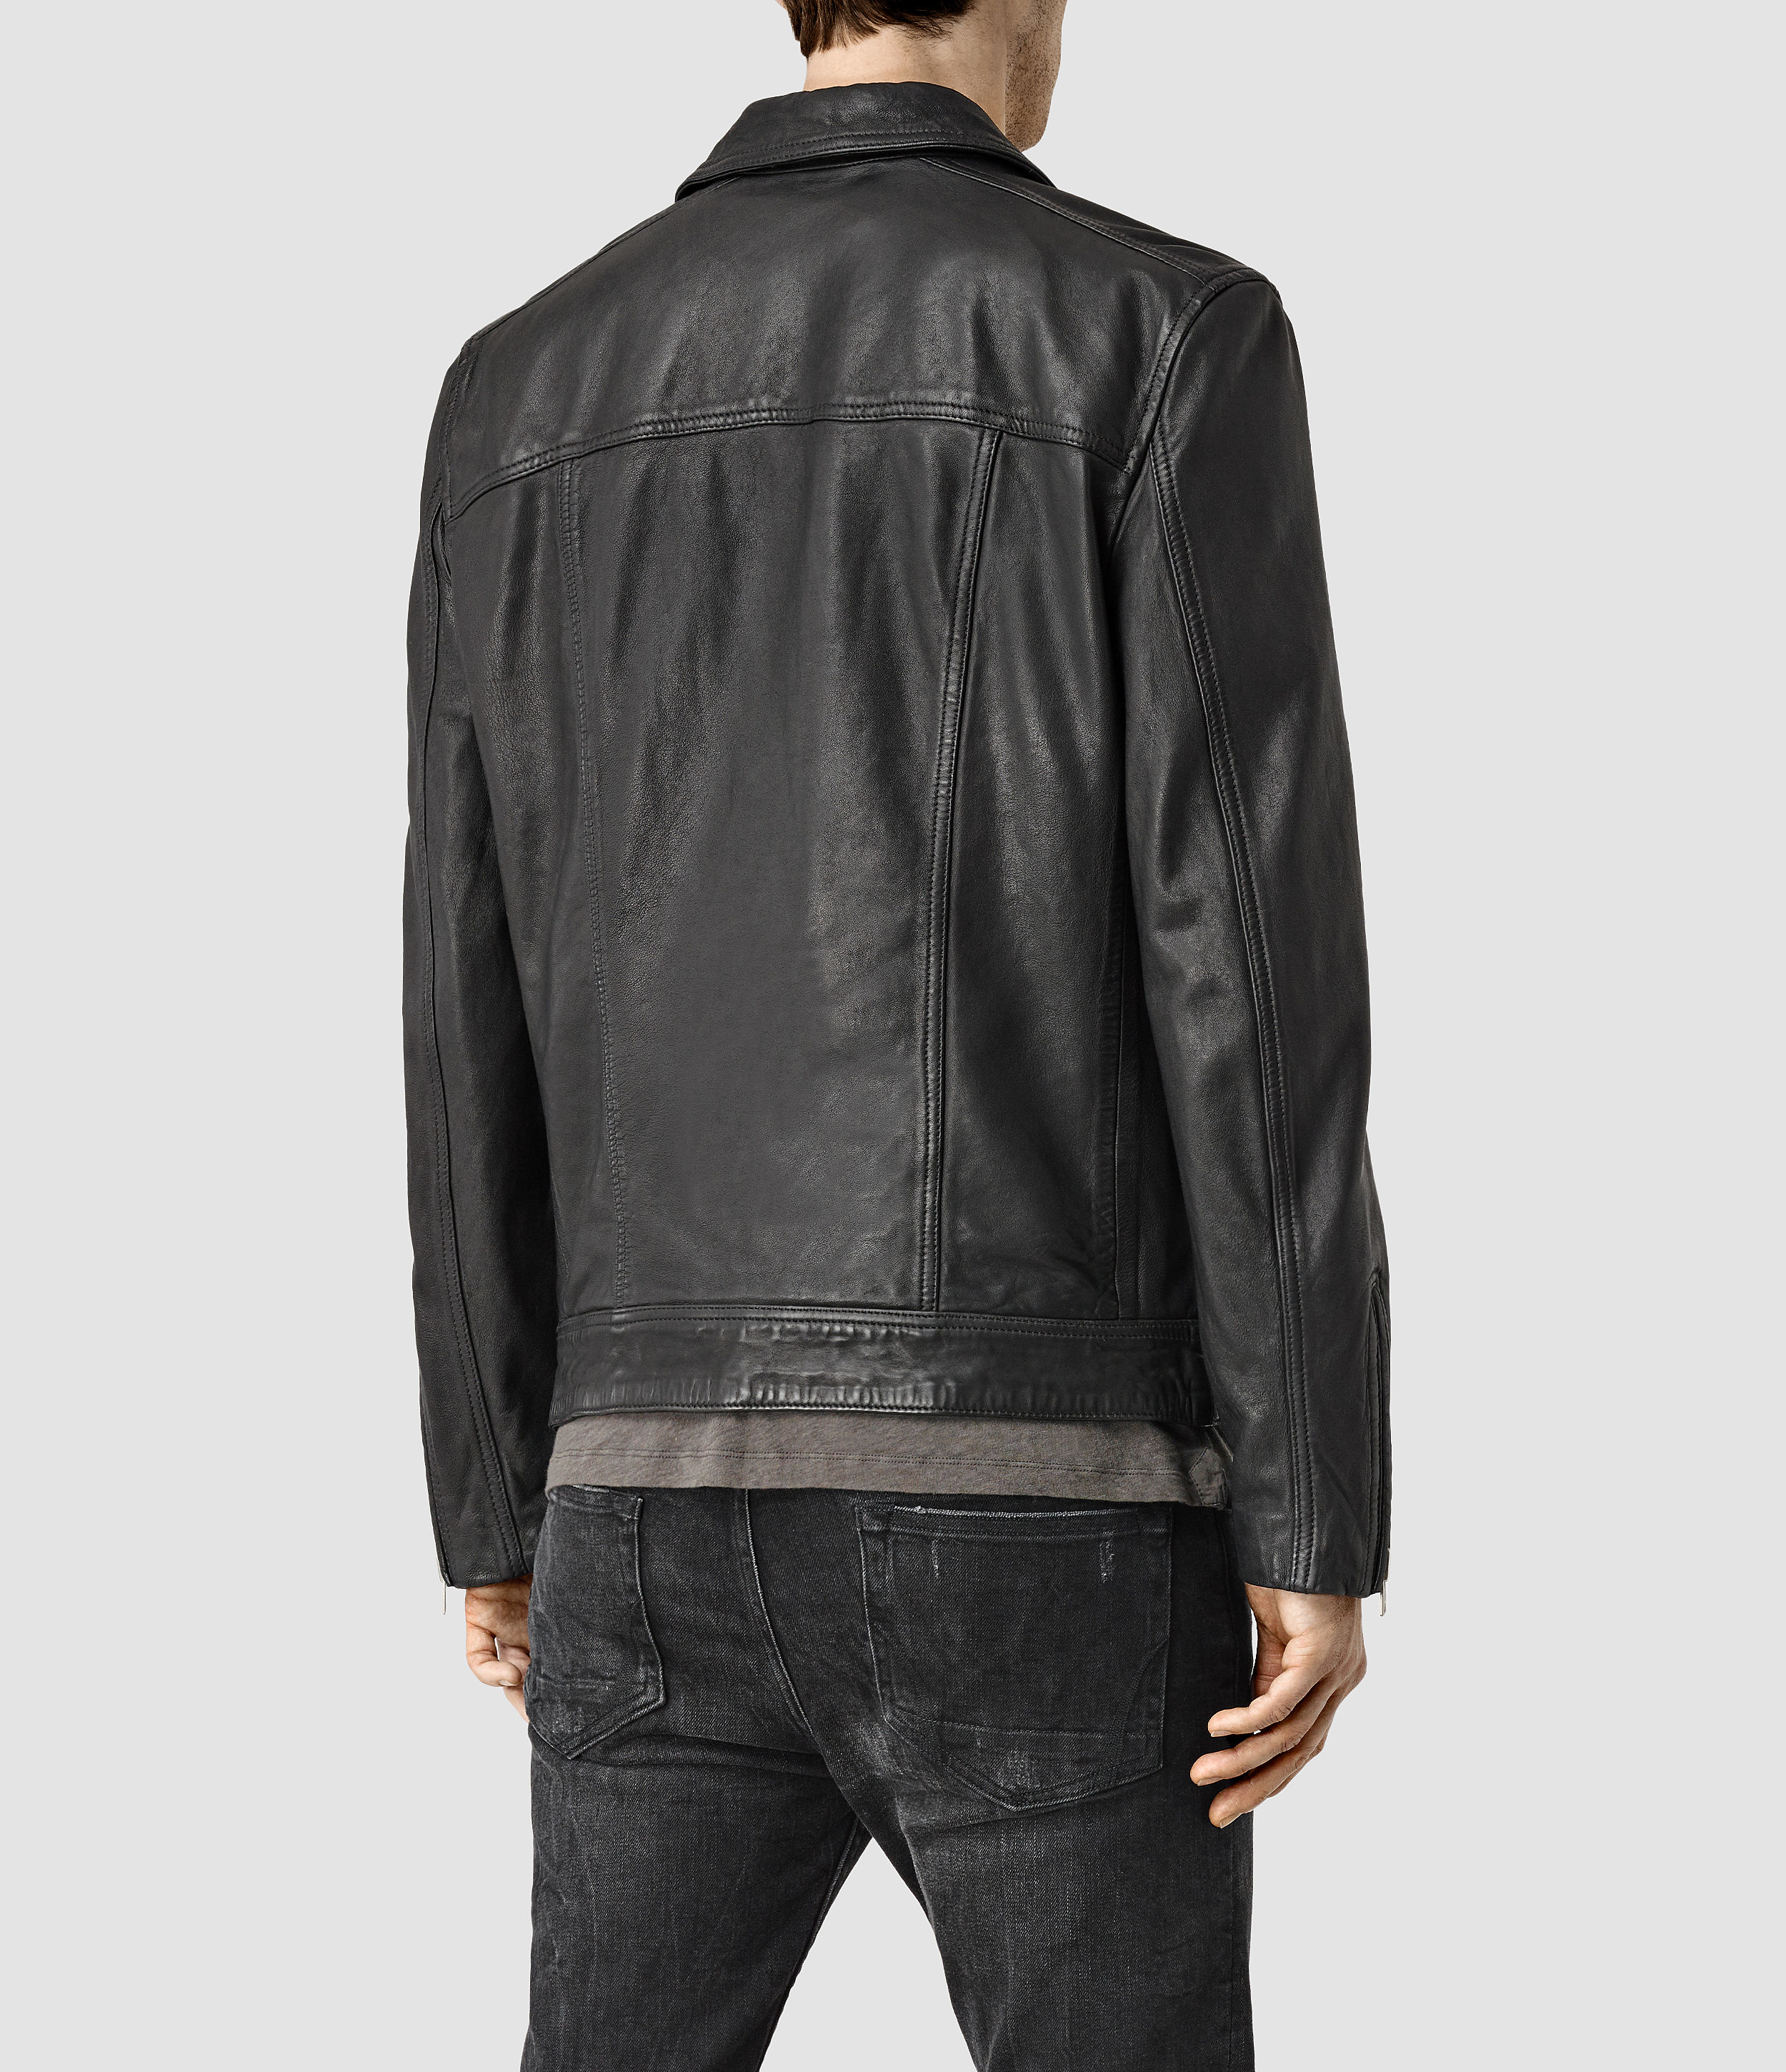 Lyst - Allsaints Clay Leather Biker Jacket in Black for Men